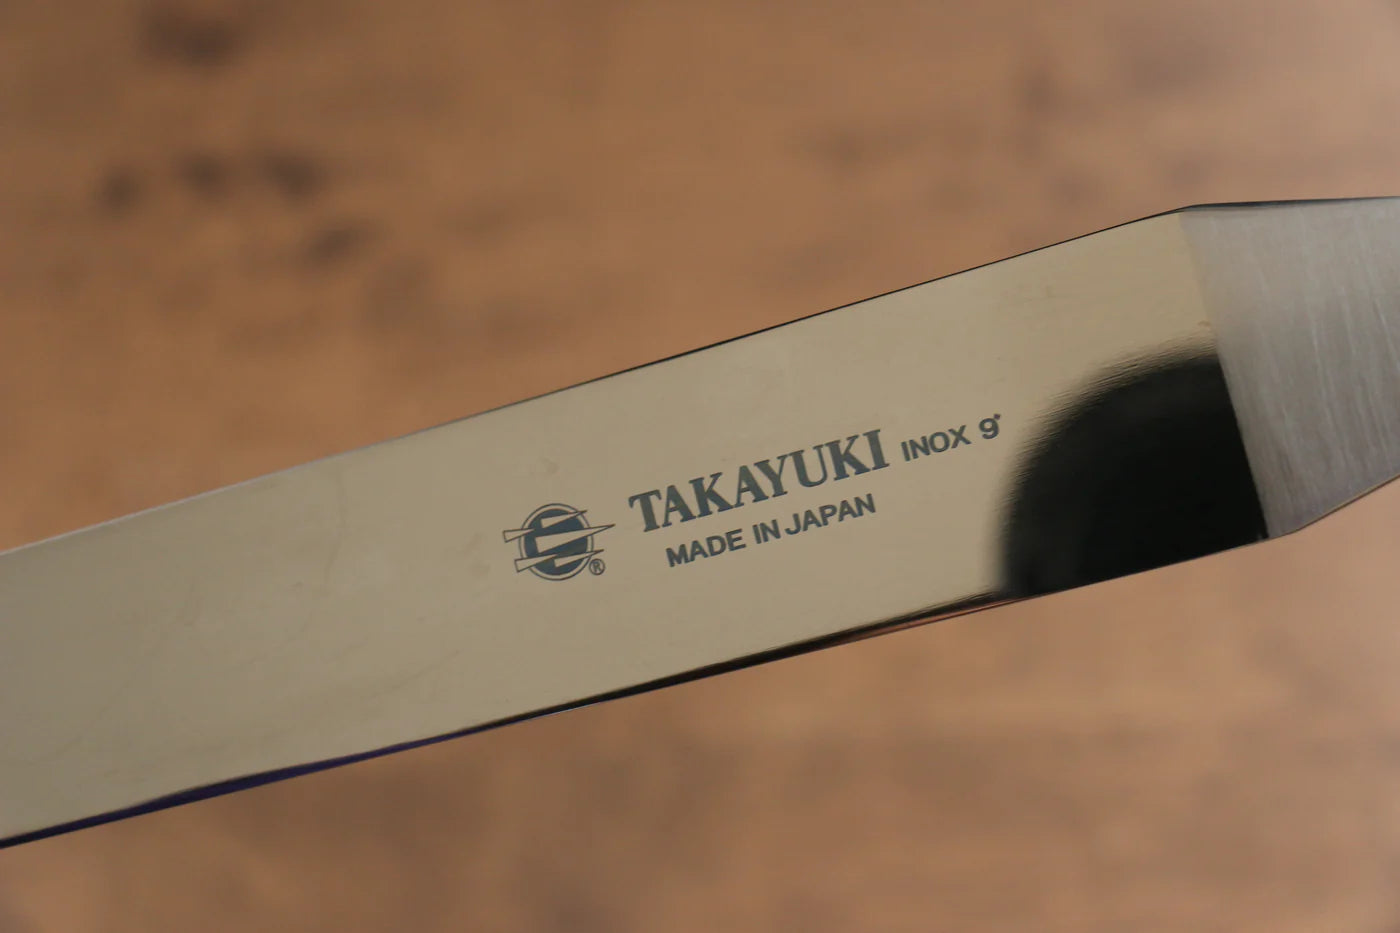 Free ship - Thương hiệu Sakai Takayuki INOX Molybdenum Dao Palette dao Nhật 225mm